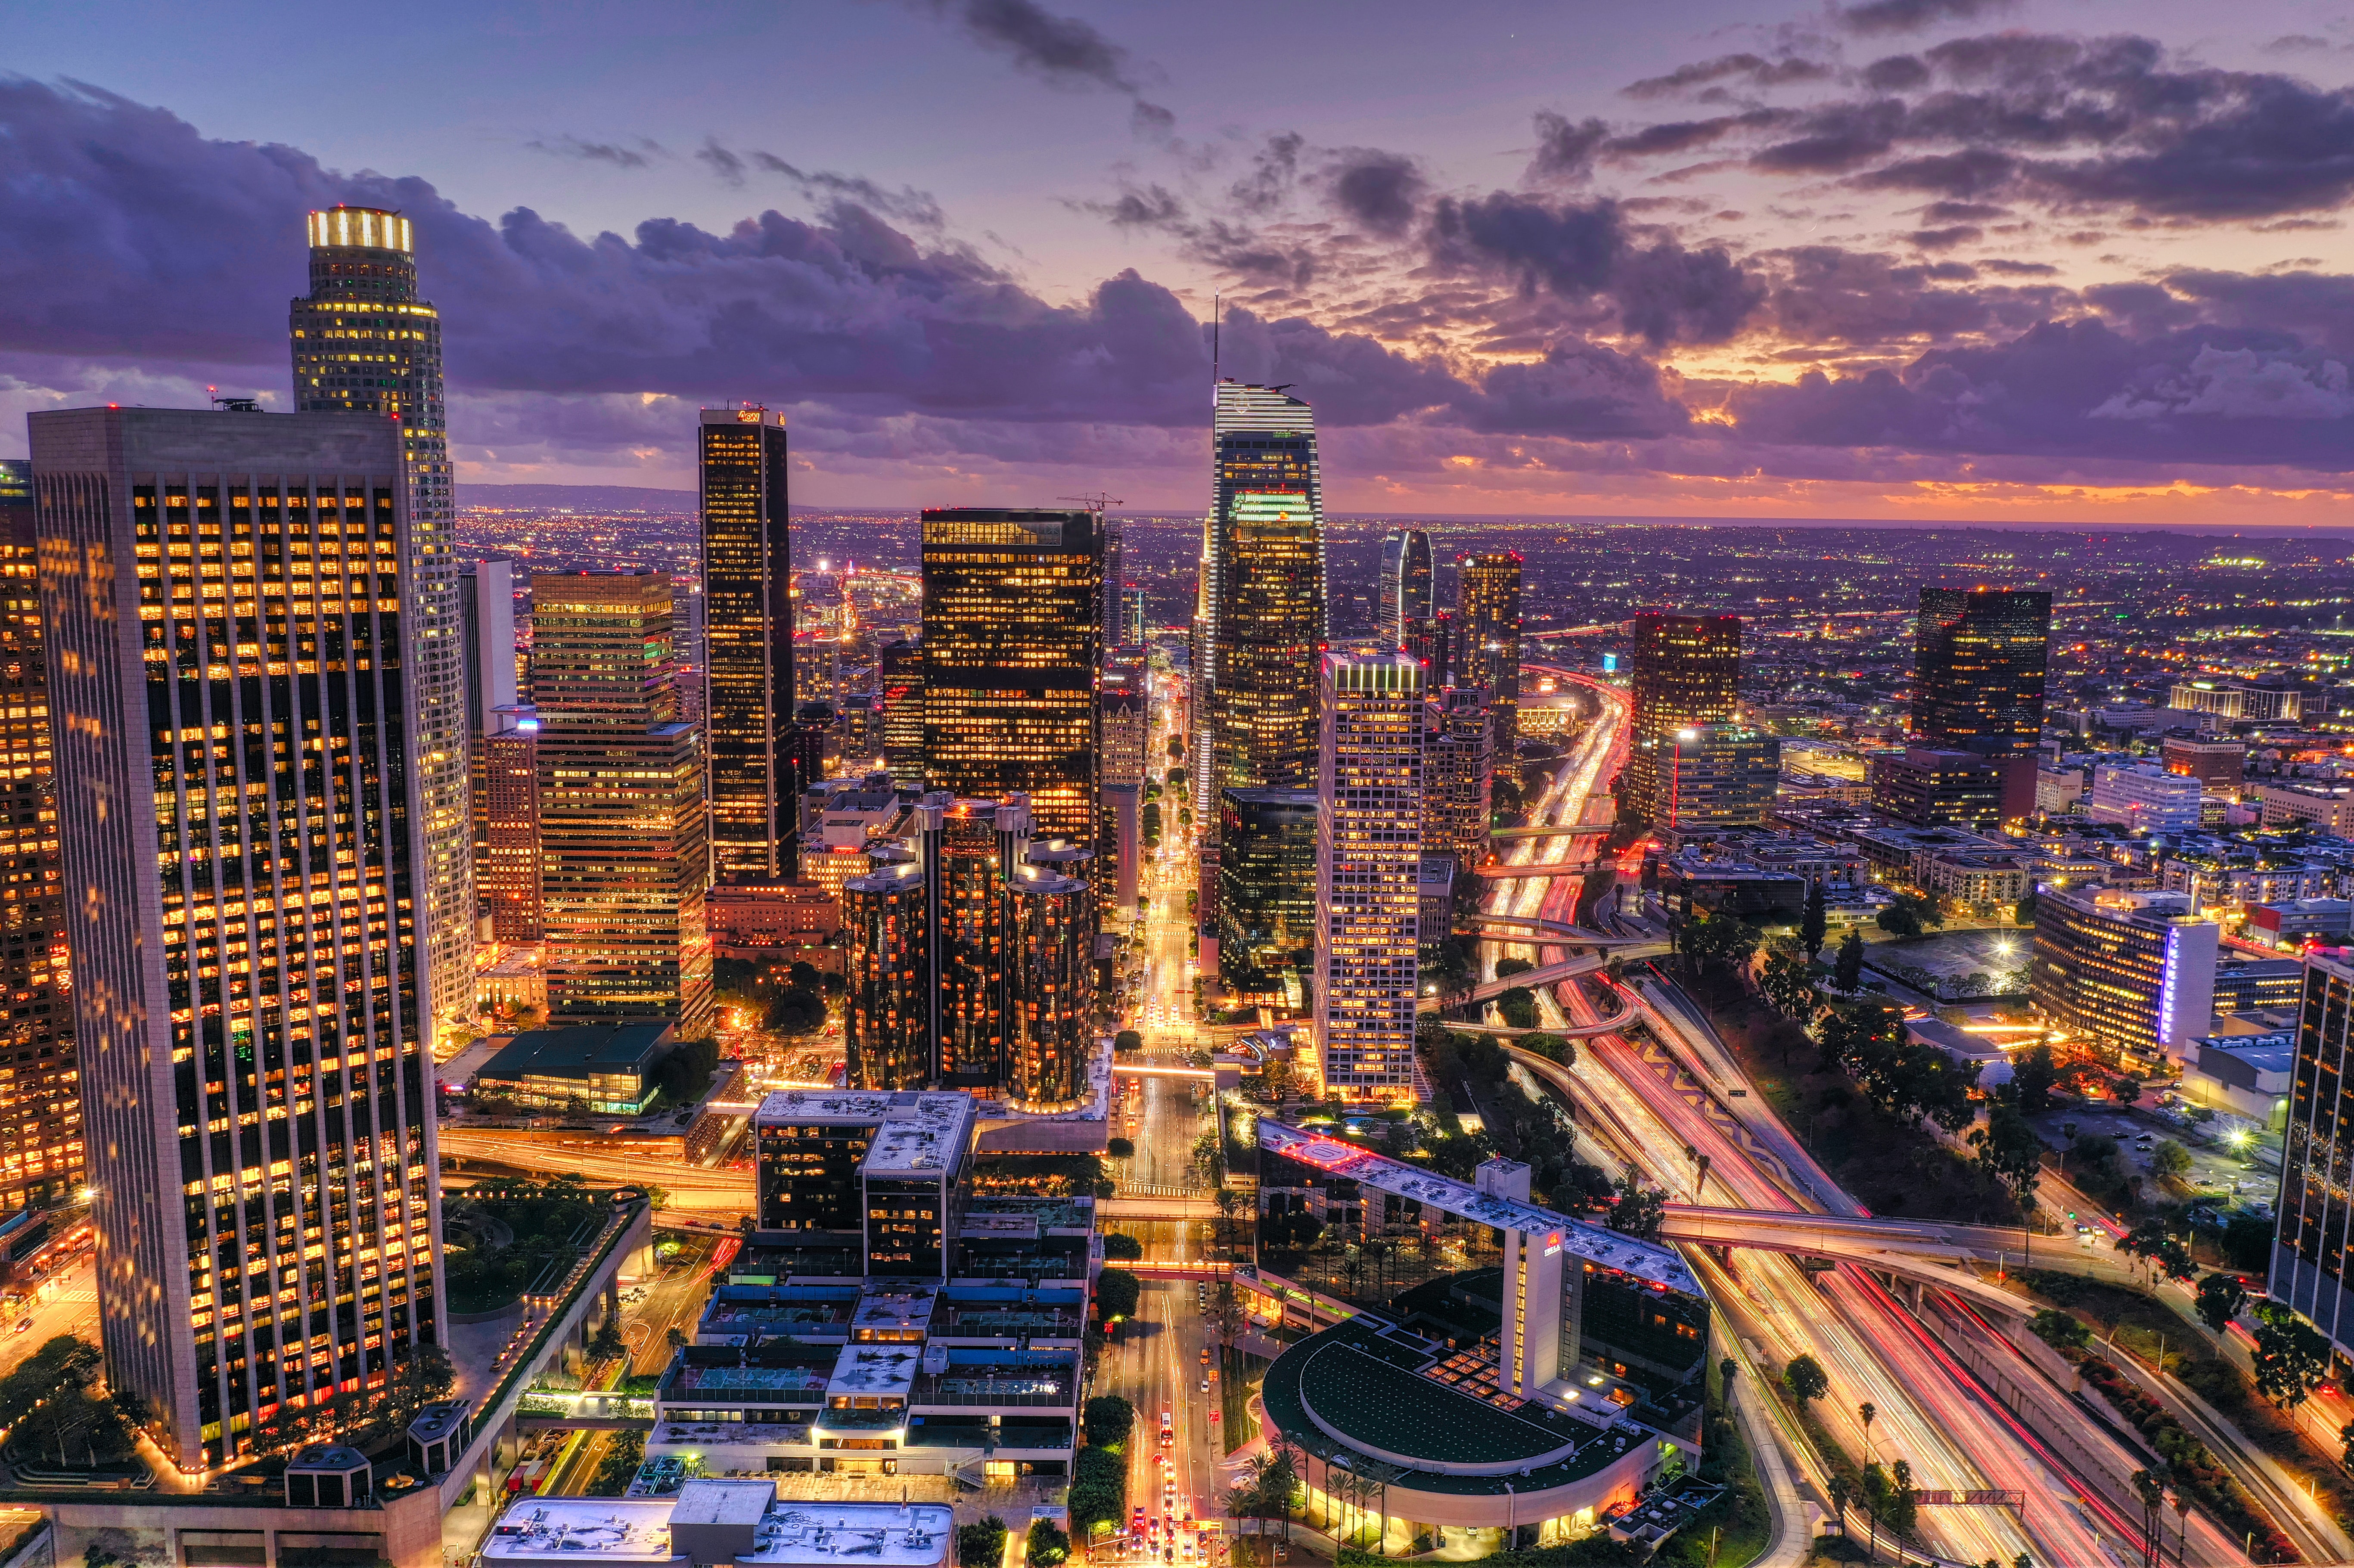 Night view of Los Angeles Skyline